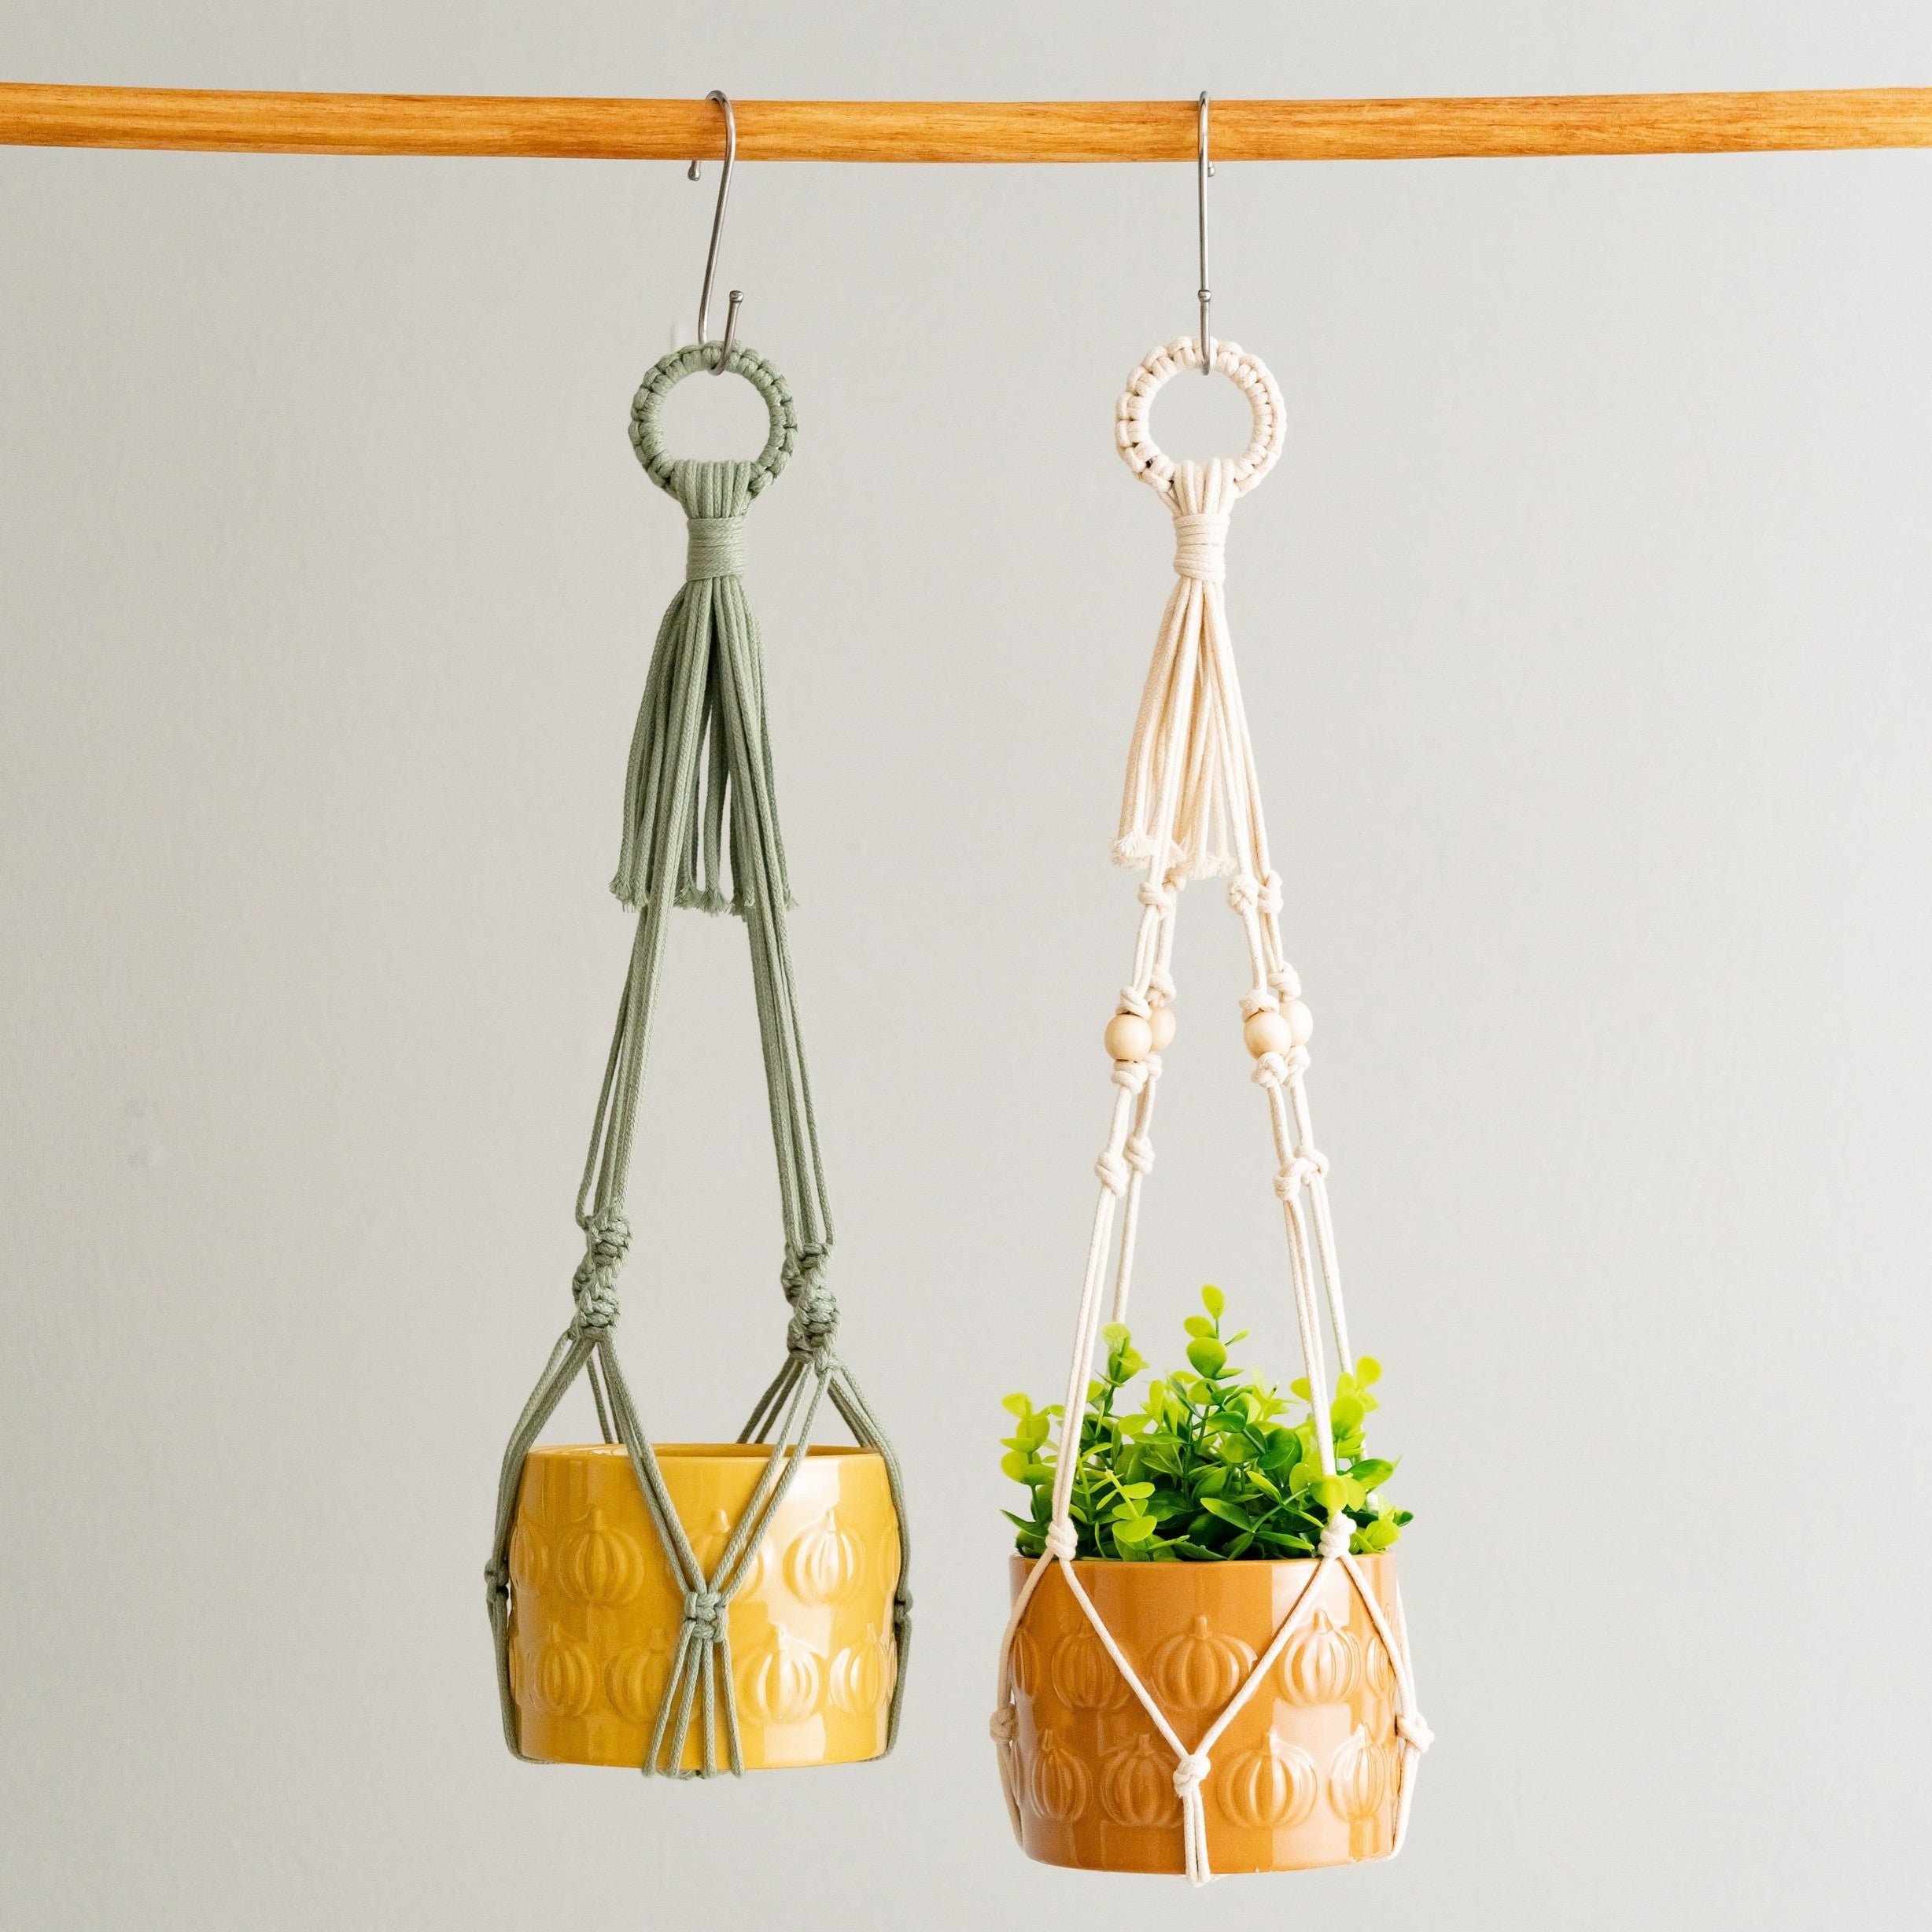 Macrame Plant Hanger for Stylish Indoor Greenery